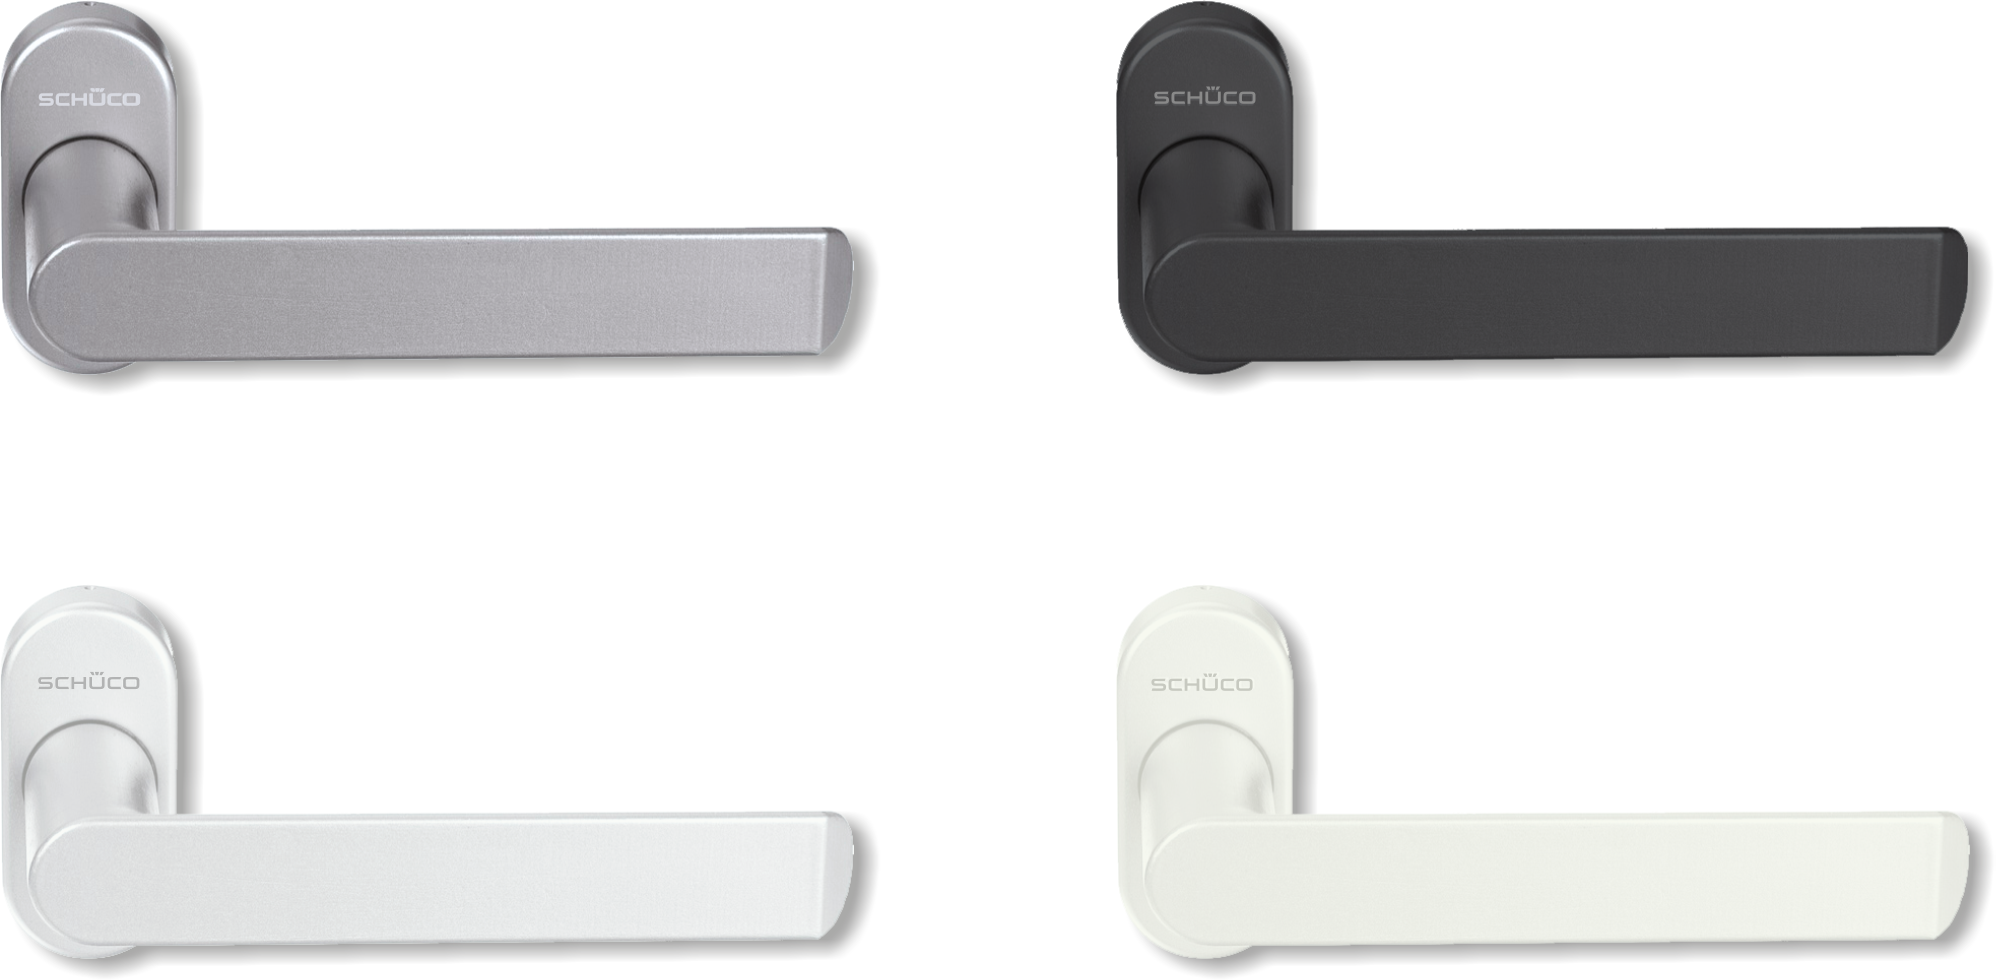 Design handle